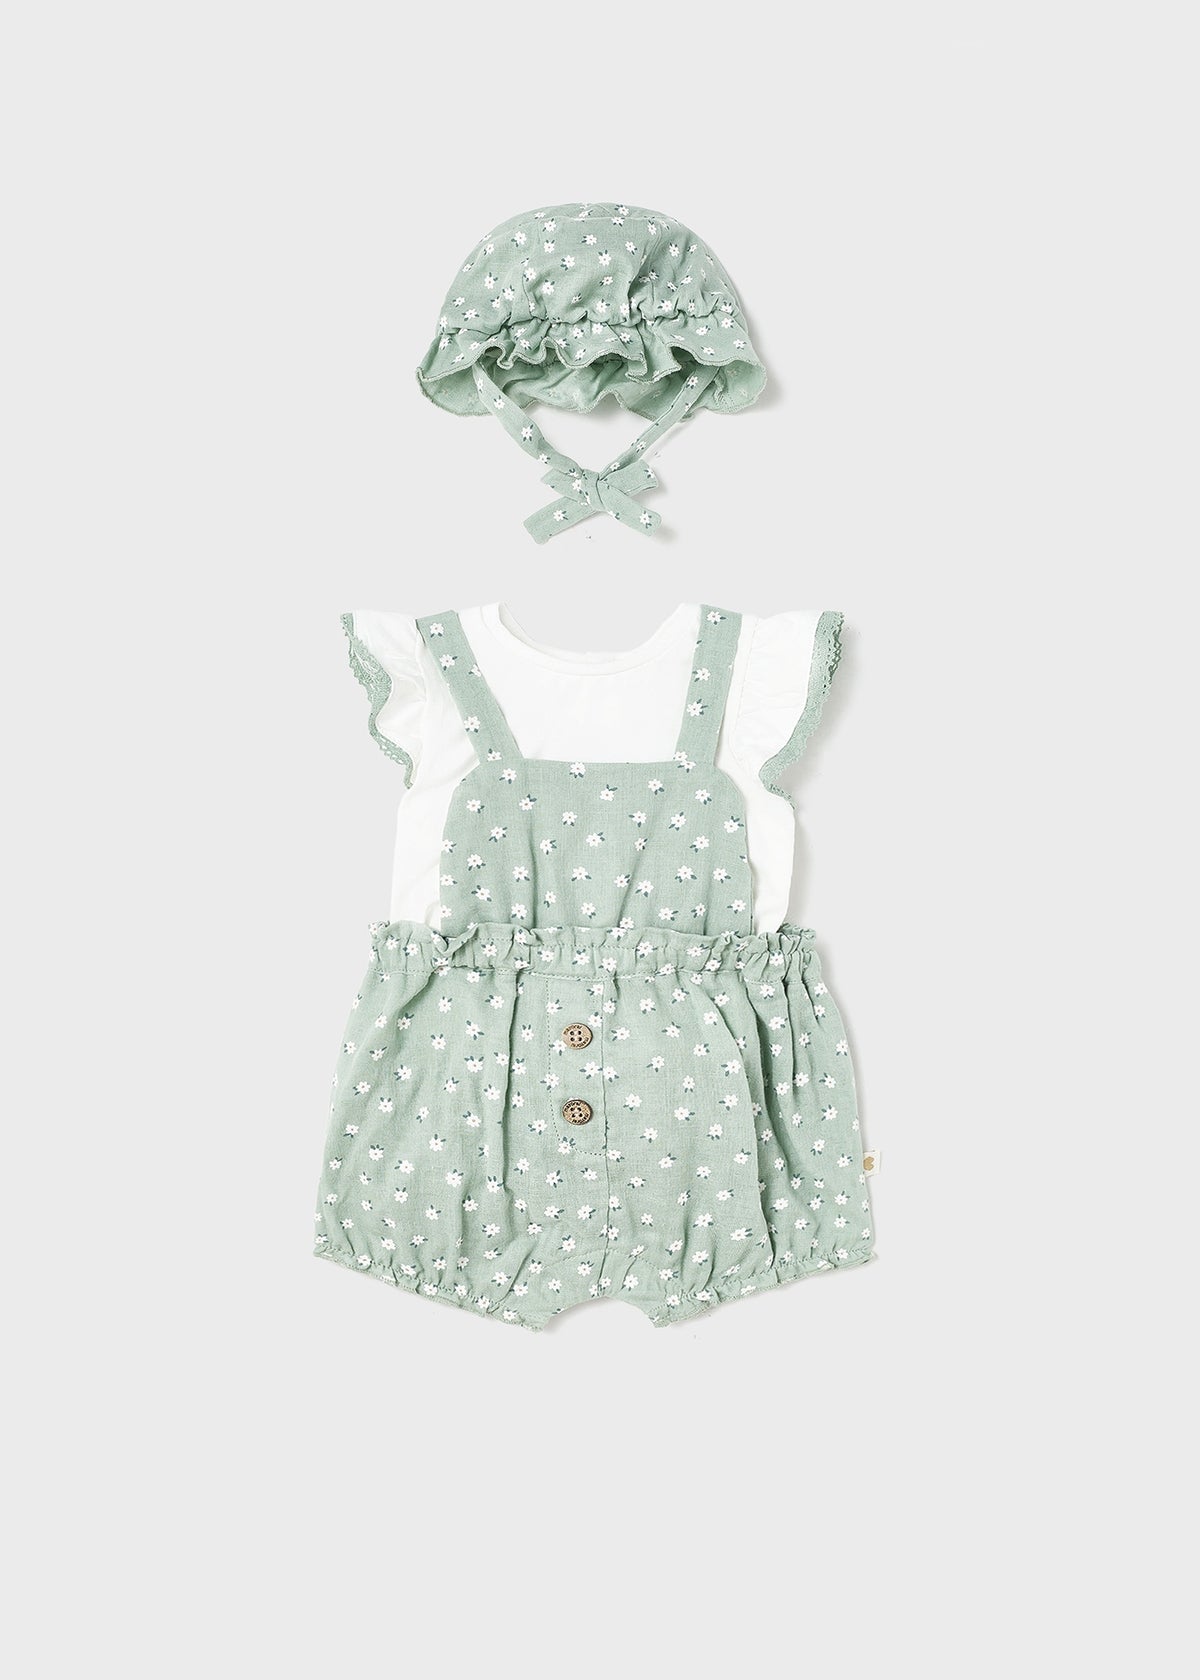 Baby Mädchen Set Kleid 1607 Aqua